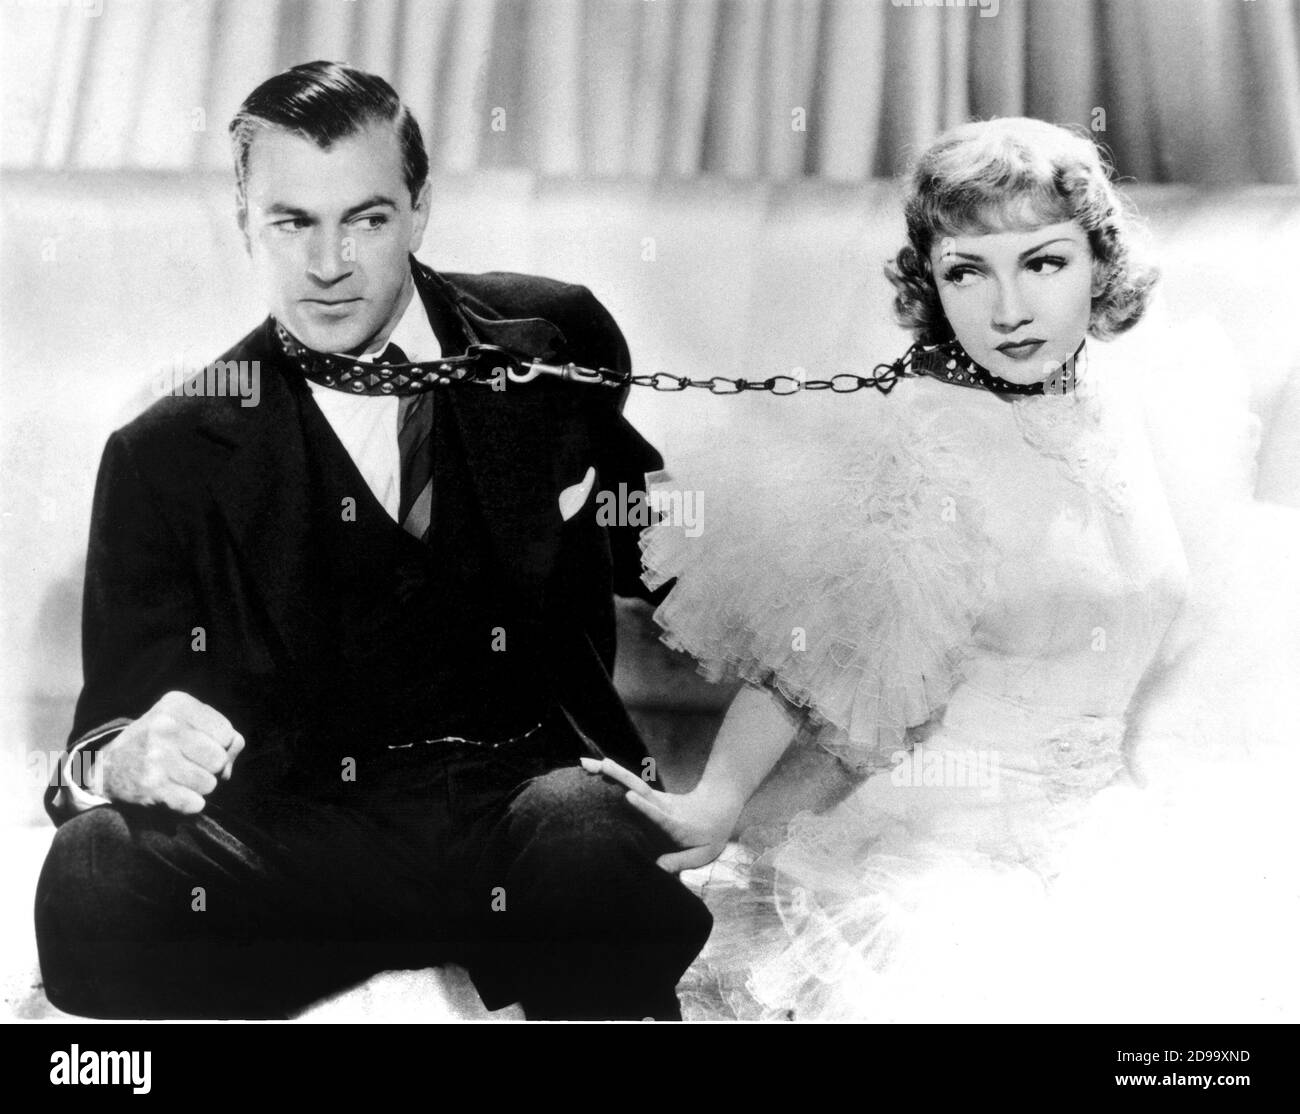 The movie actors GARY  COOPER and CLAUDETTE  COLBERT  in ' Bluebeard's Eight Wife ' ( 1938 - L' ottava moglie di Barbablù ) by Ernst Lubitsch - MOVIE - FILM - Hollywood -PARAMOUNT -  CINEMA - marito e moglie - matrimonio - guinzaglio - catena - tulle - capelli biondi - blonde hair - amanti - lovers - legame - husband - wife - marriage - love-match - matrimoniale - matrimonial - conjugal - letto matrimoniale - double room - bed - leash - lead - chain - chains - catene -  CULT - scena - scene ----  Archivio GBB Stock Photo